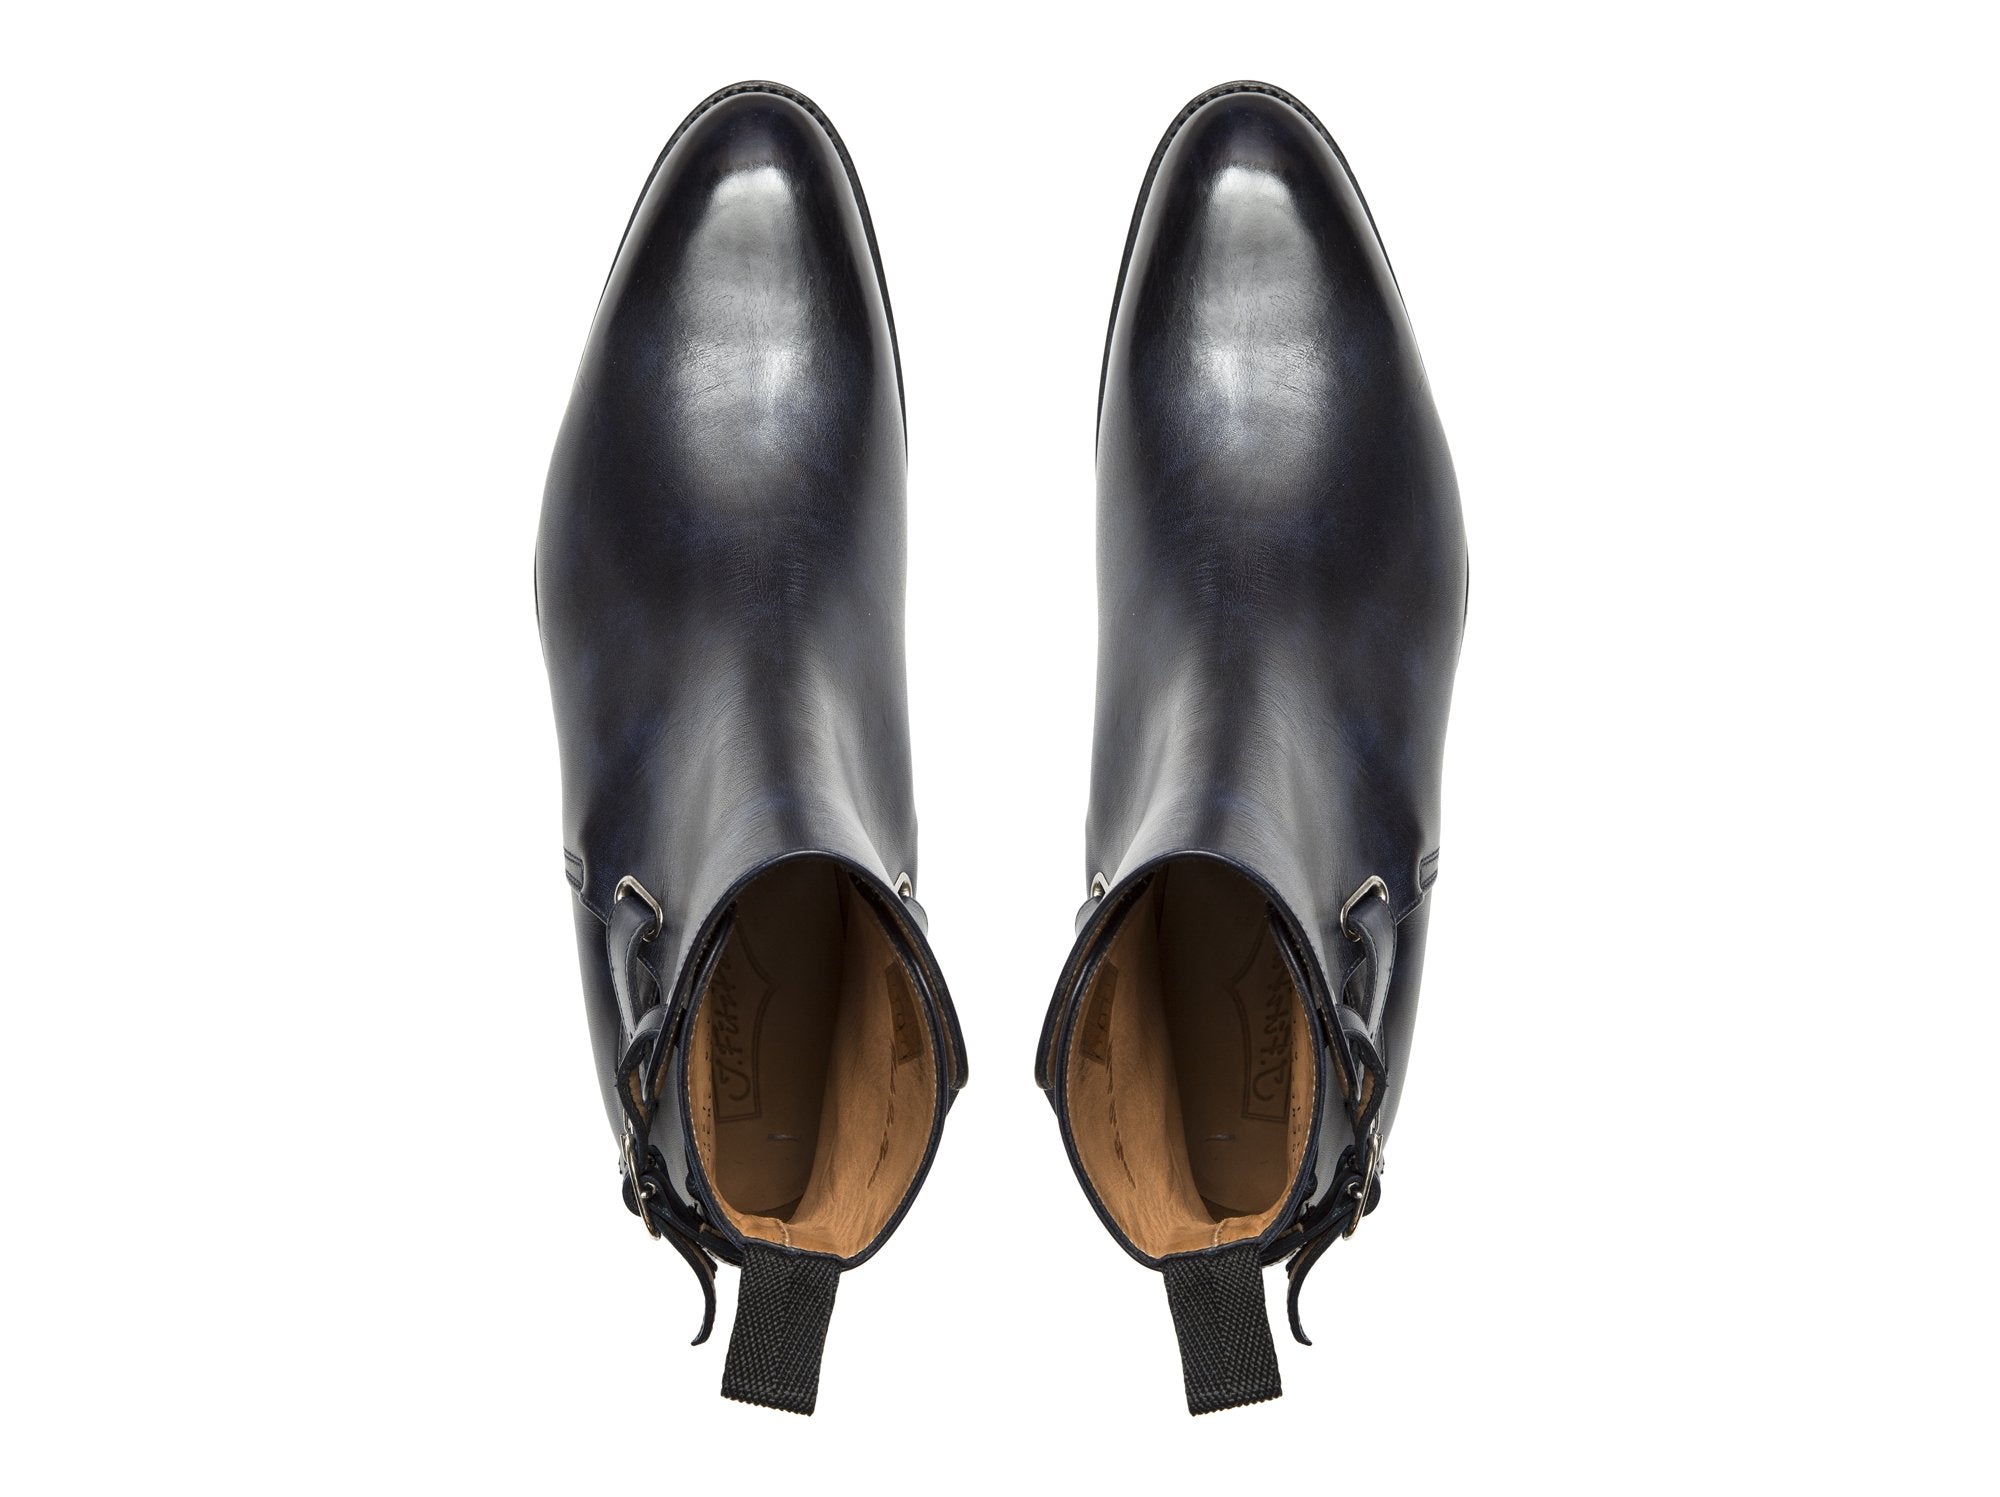 J.FitzPatrick Footwear - Genesee - Navy Museum Calf - NGT last - Double Leather Sole